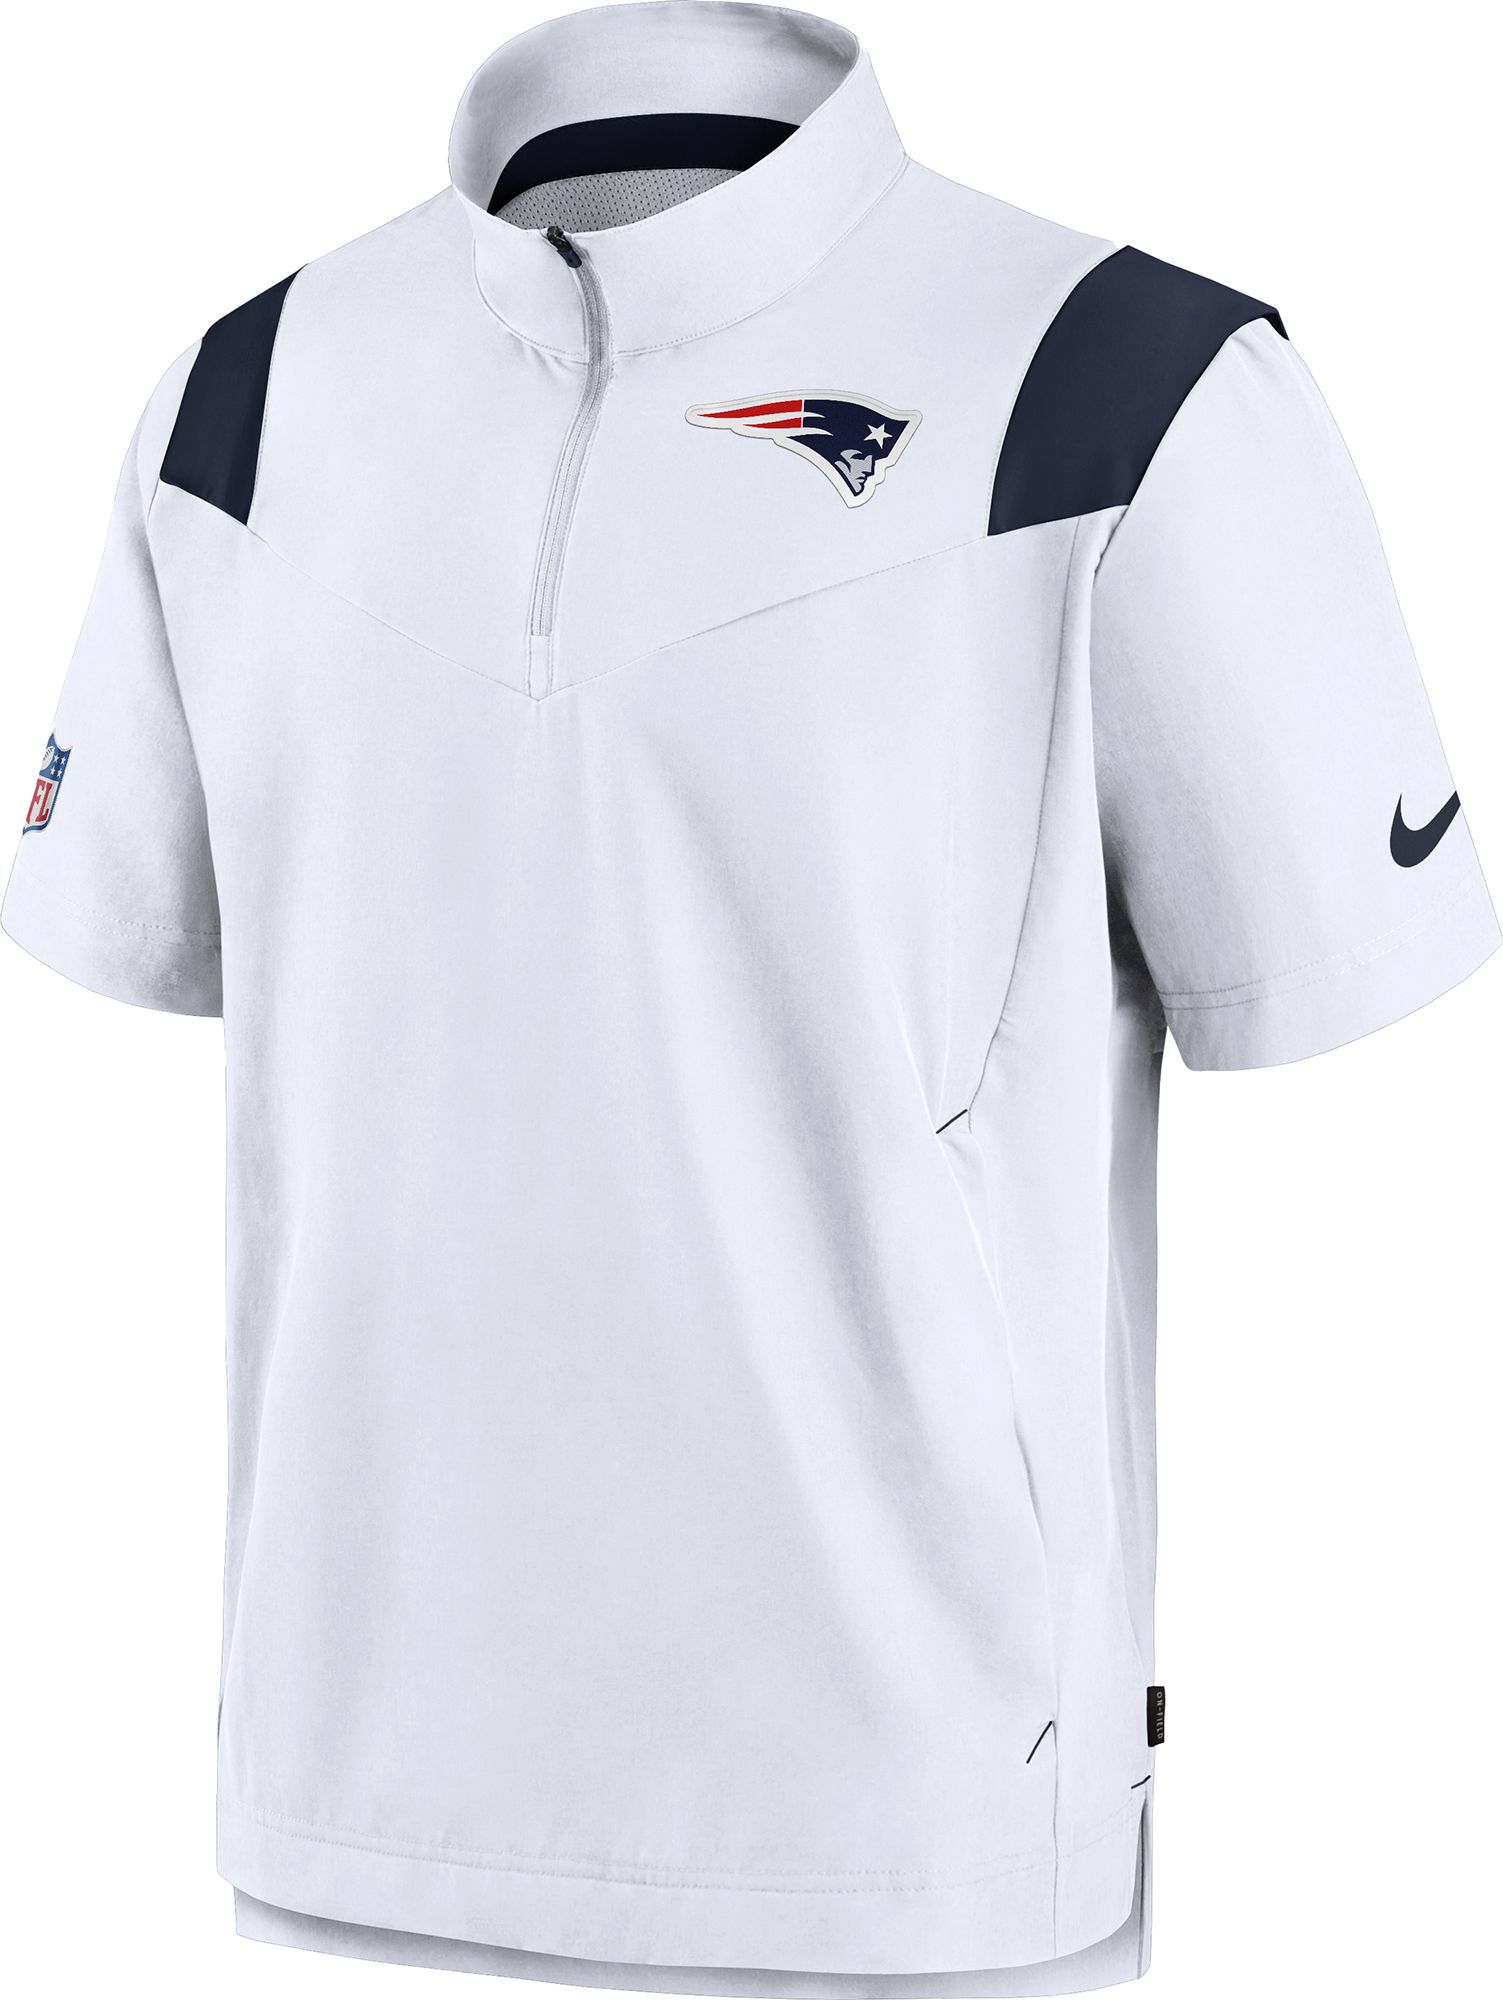 Men's New England Patriots Sideline Coaches Short Sleeve White Jacket